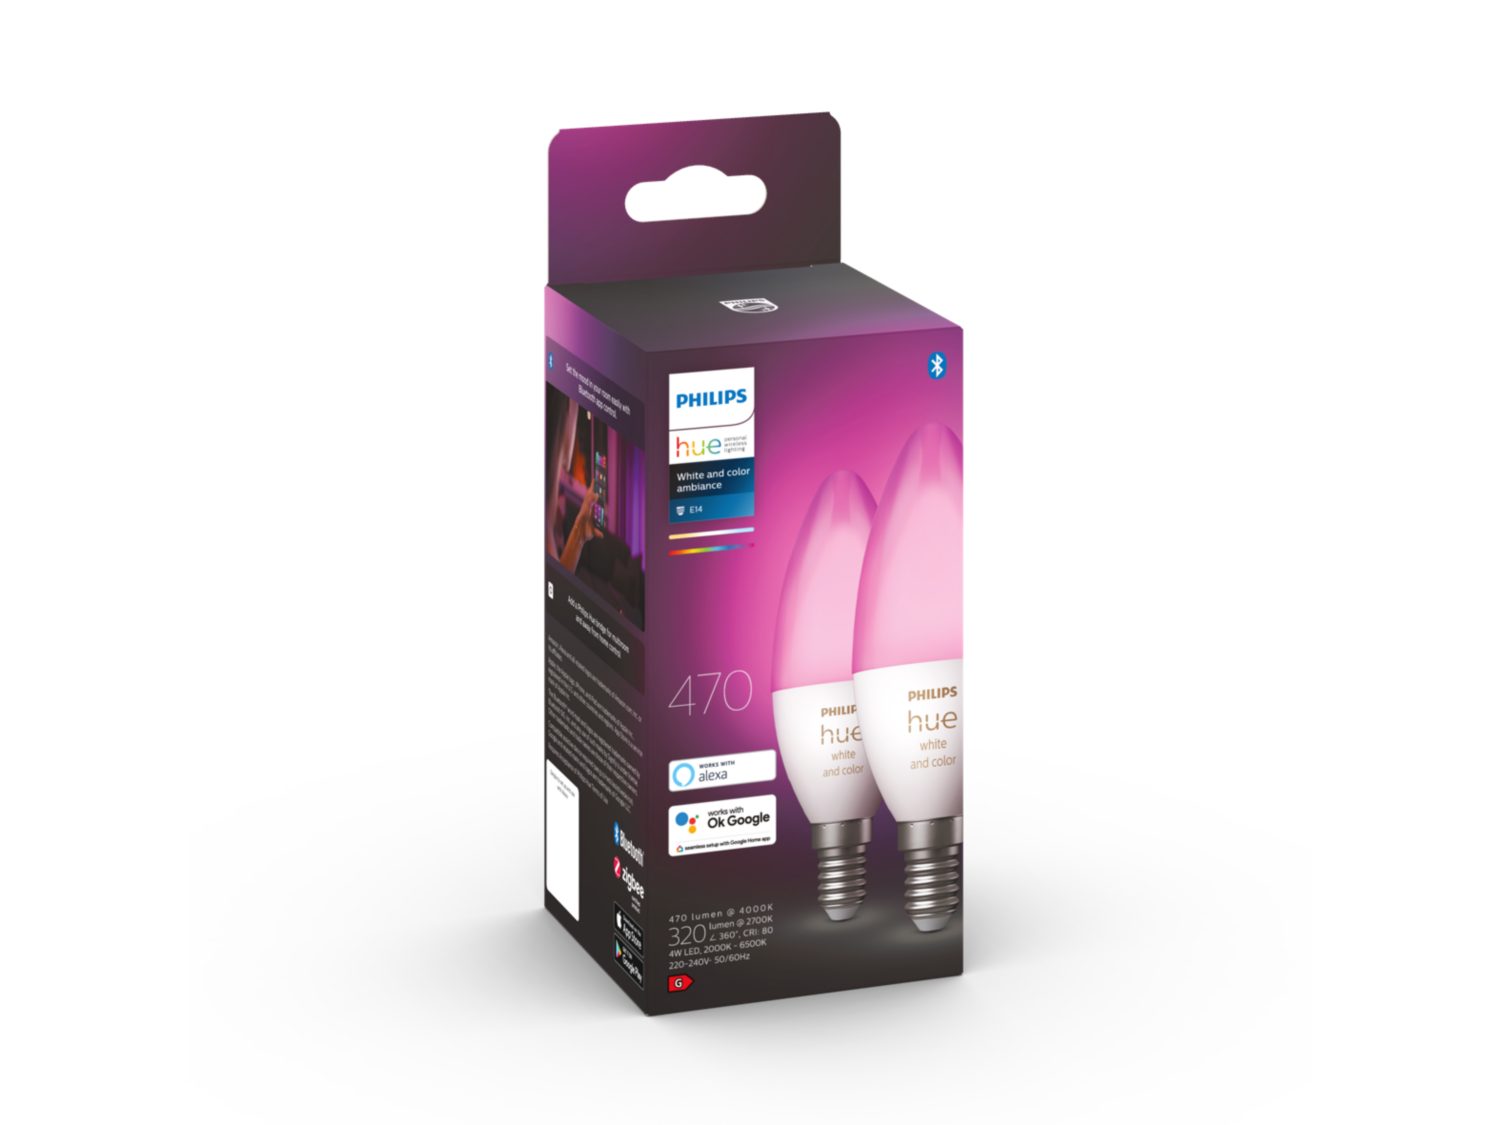 Buy Philips Hue White Ambiance Smart Bulb E14 online Worldwide 